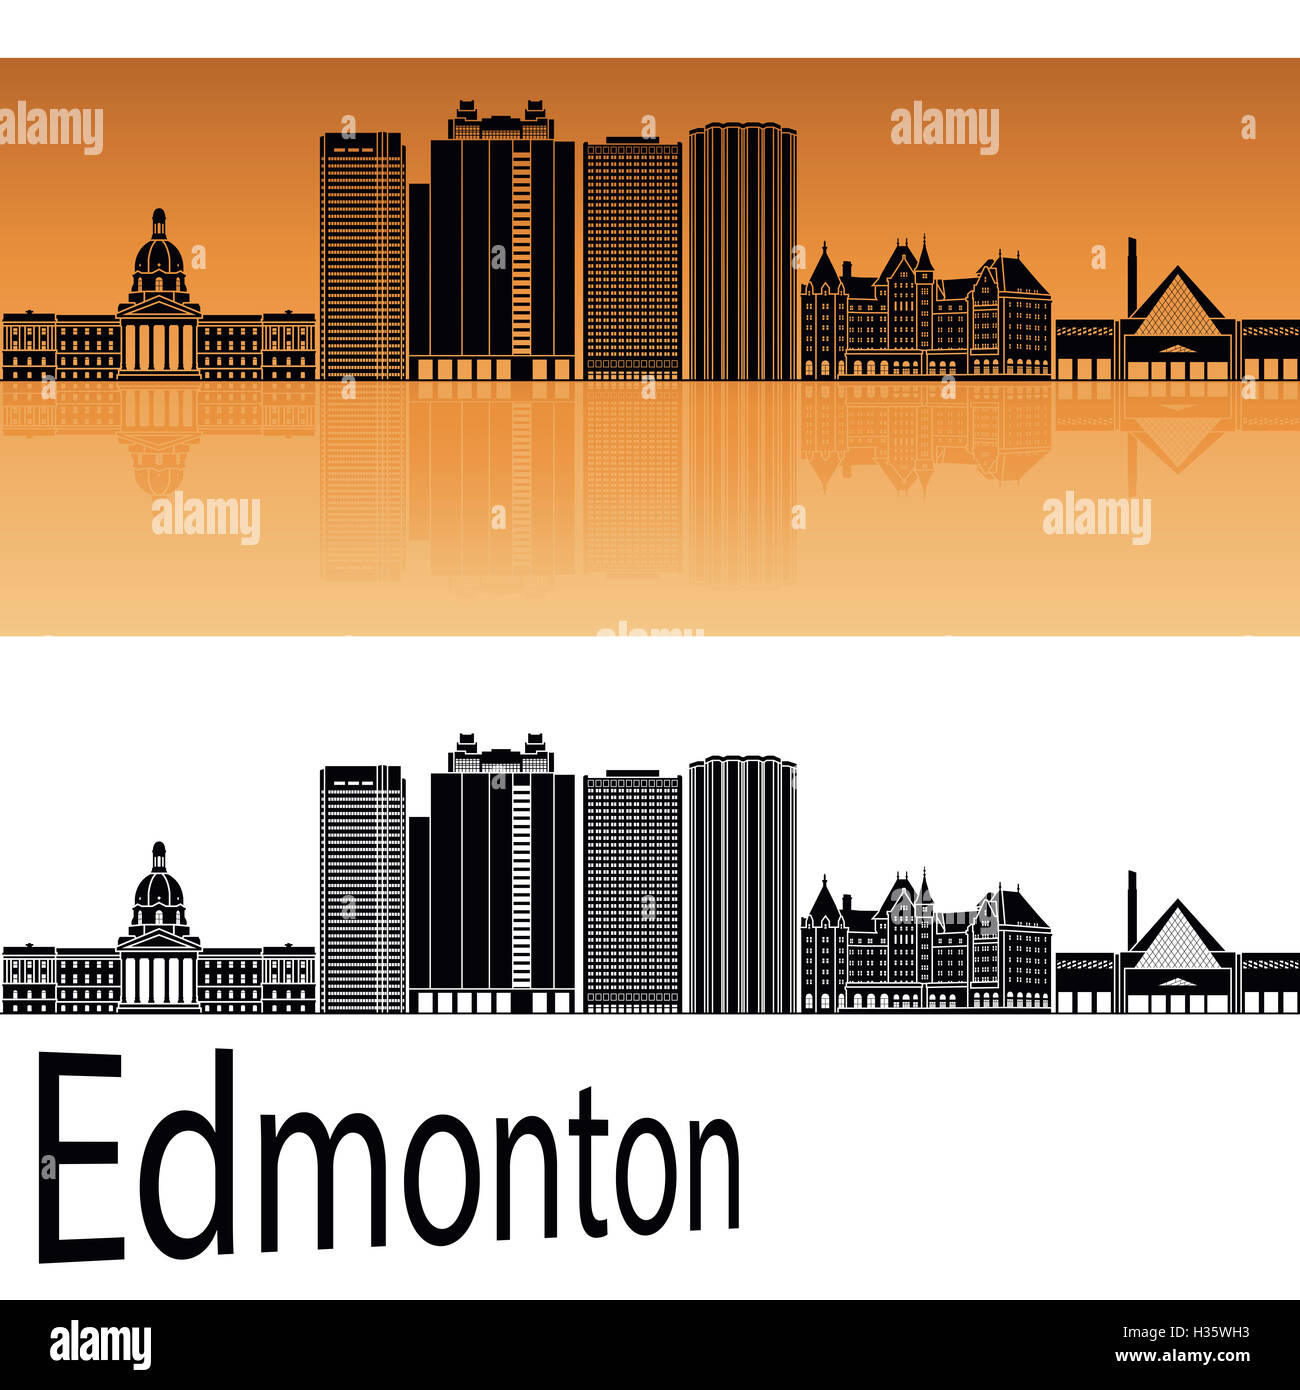 Edmonton V2 skyline de fondo naranja en archivo vectorial editable Foto de stock